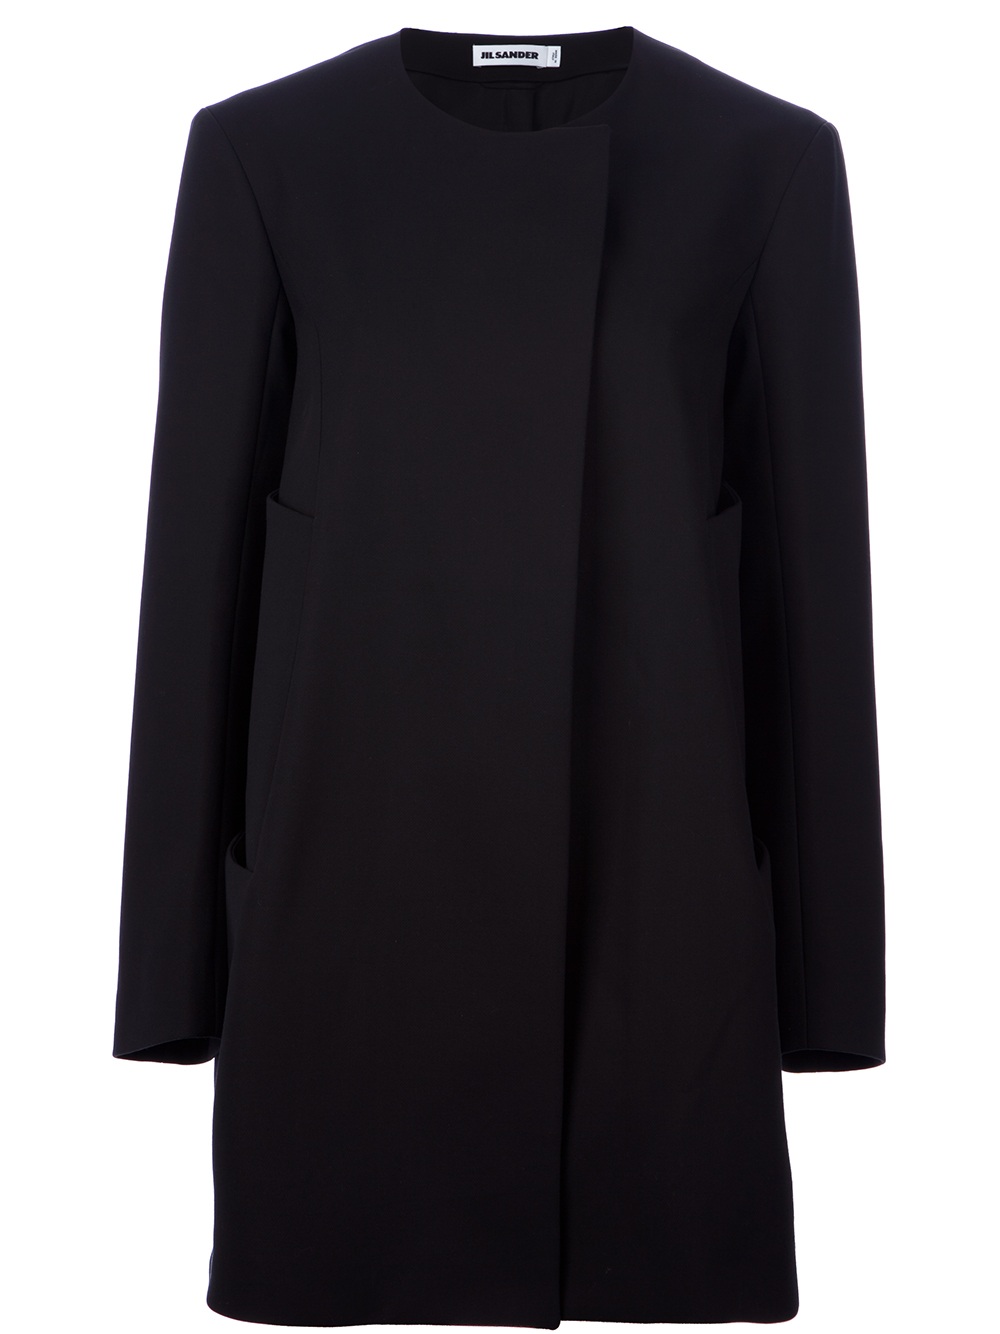 Lyst - Jil Sander Collarless Coat in Black